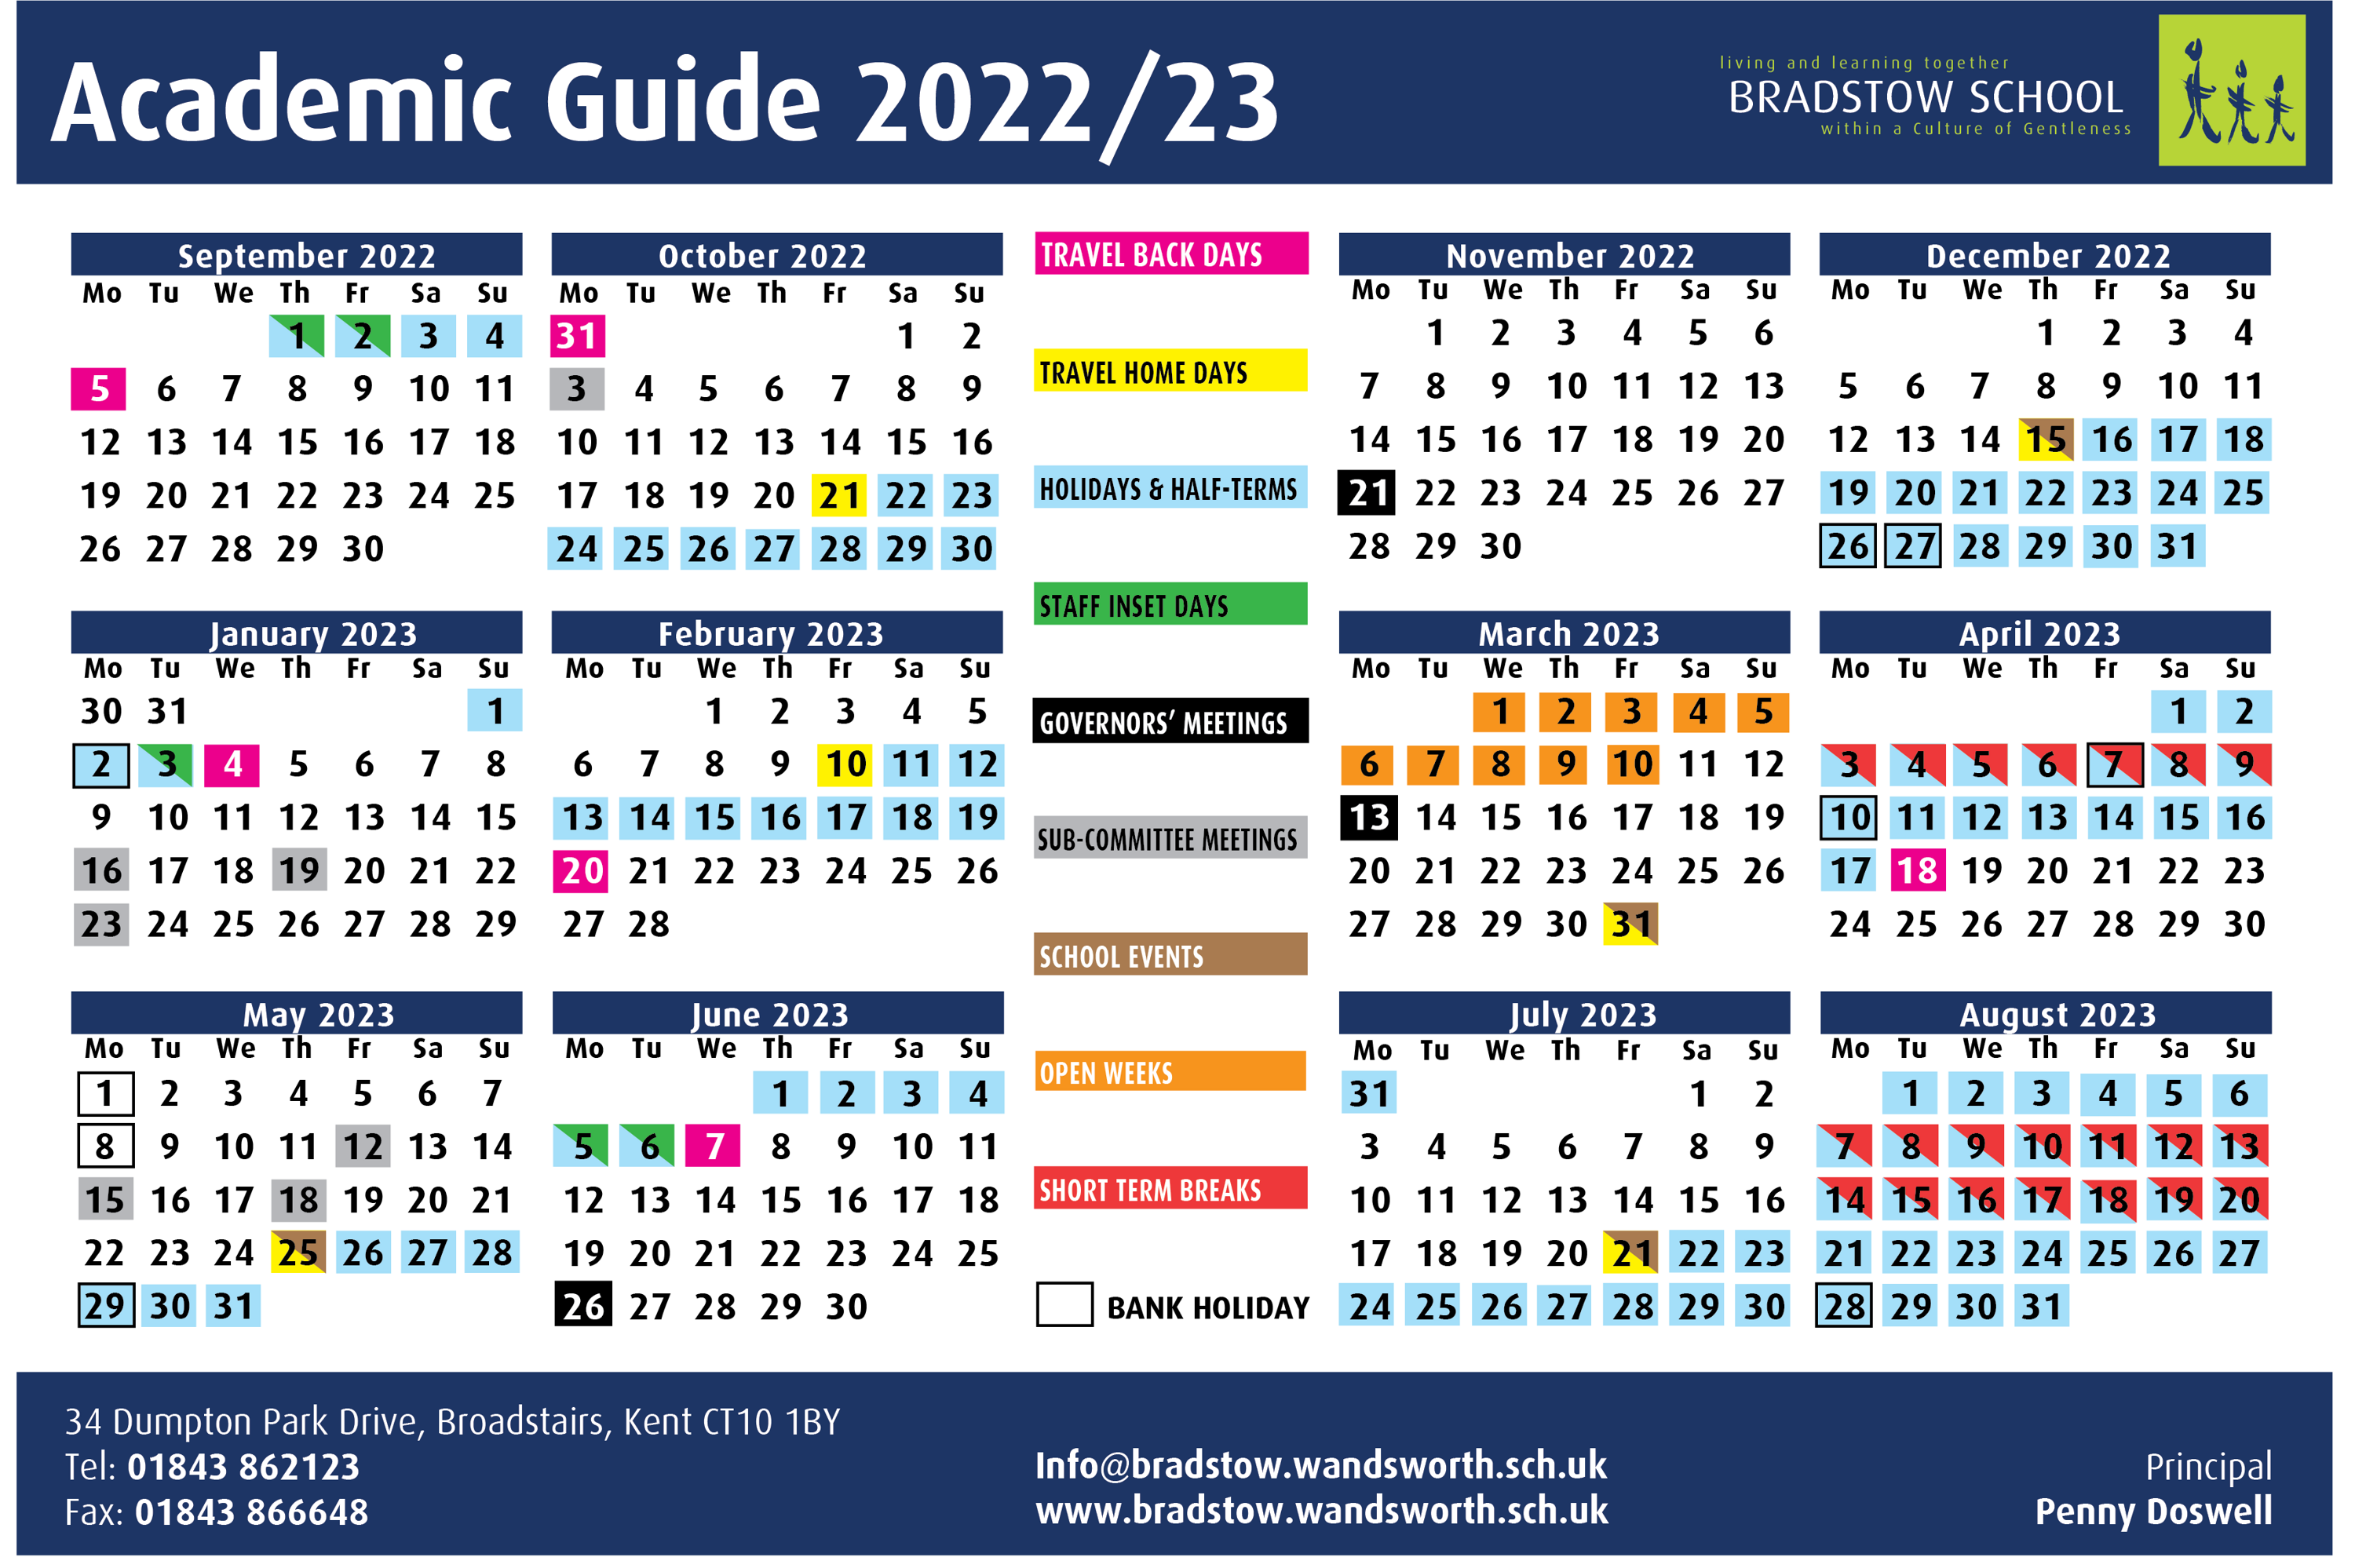 Calendar layout 2022 23 updated 6Feb2023